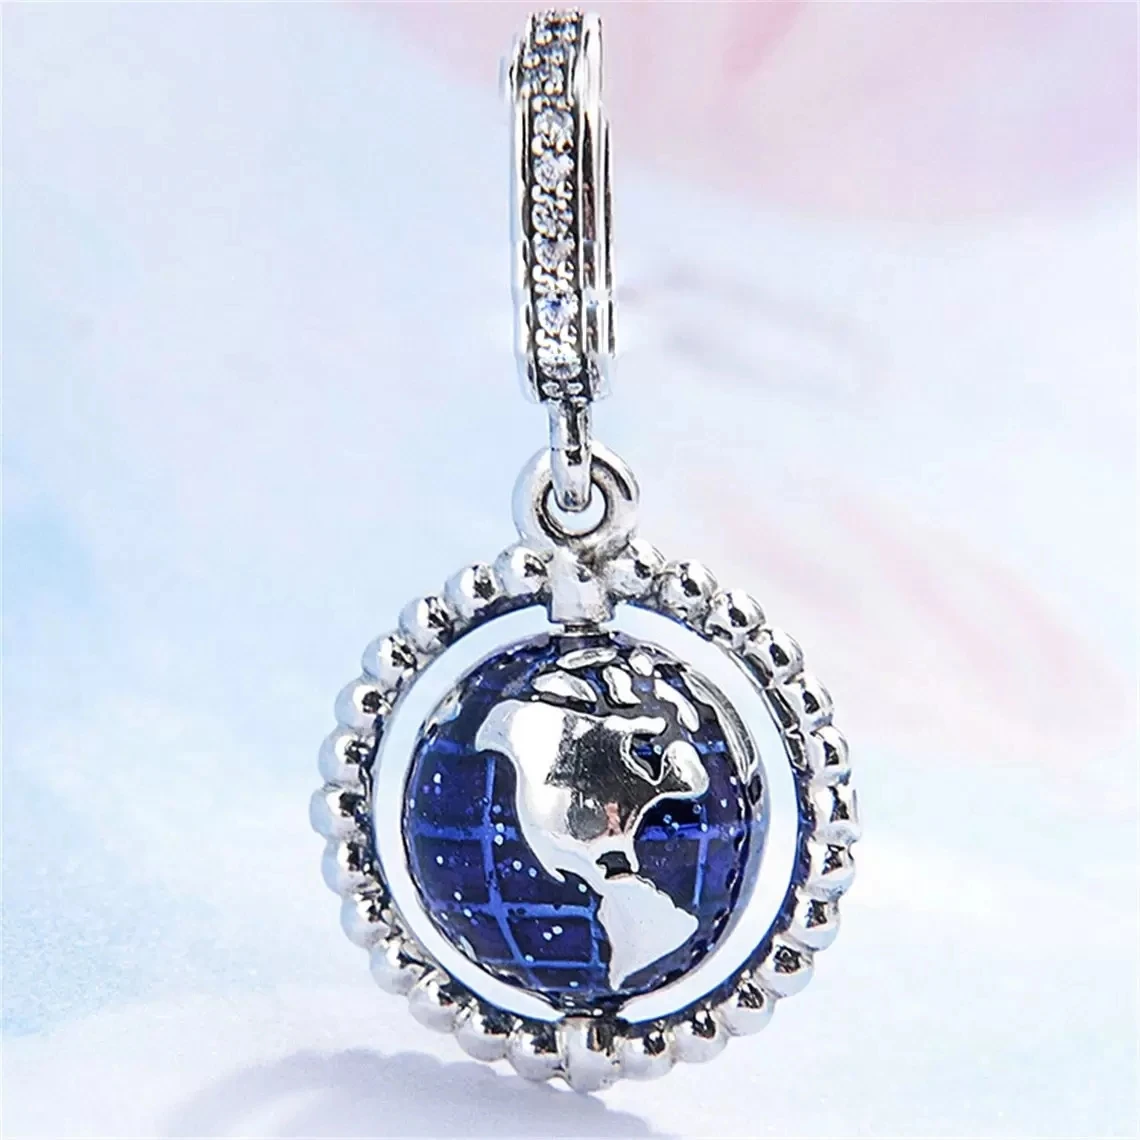 

100% 925 Sterling Silver Spinning Globe Pendant & Blue Enamel Charm Bead Fits European Style Jewelry Charm Bracelets